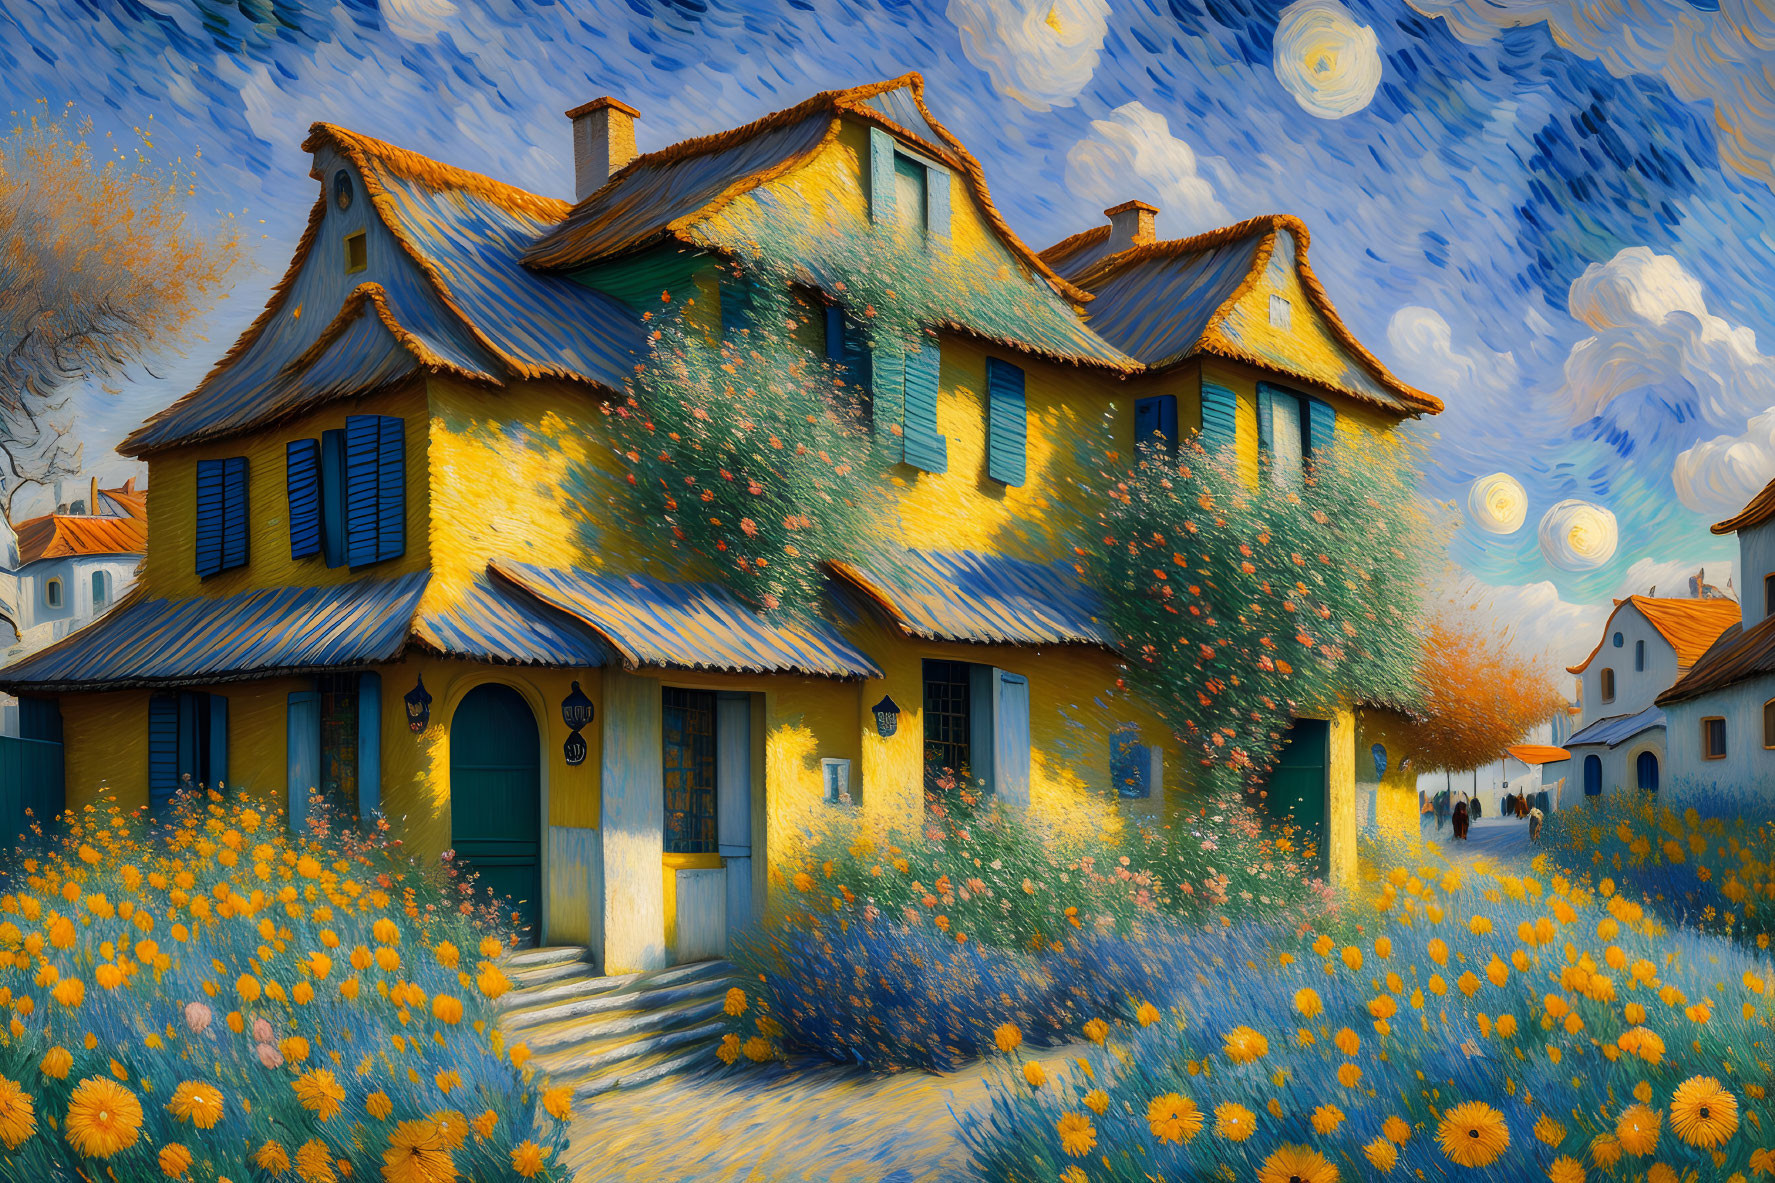 Van Gogh's house